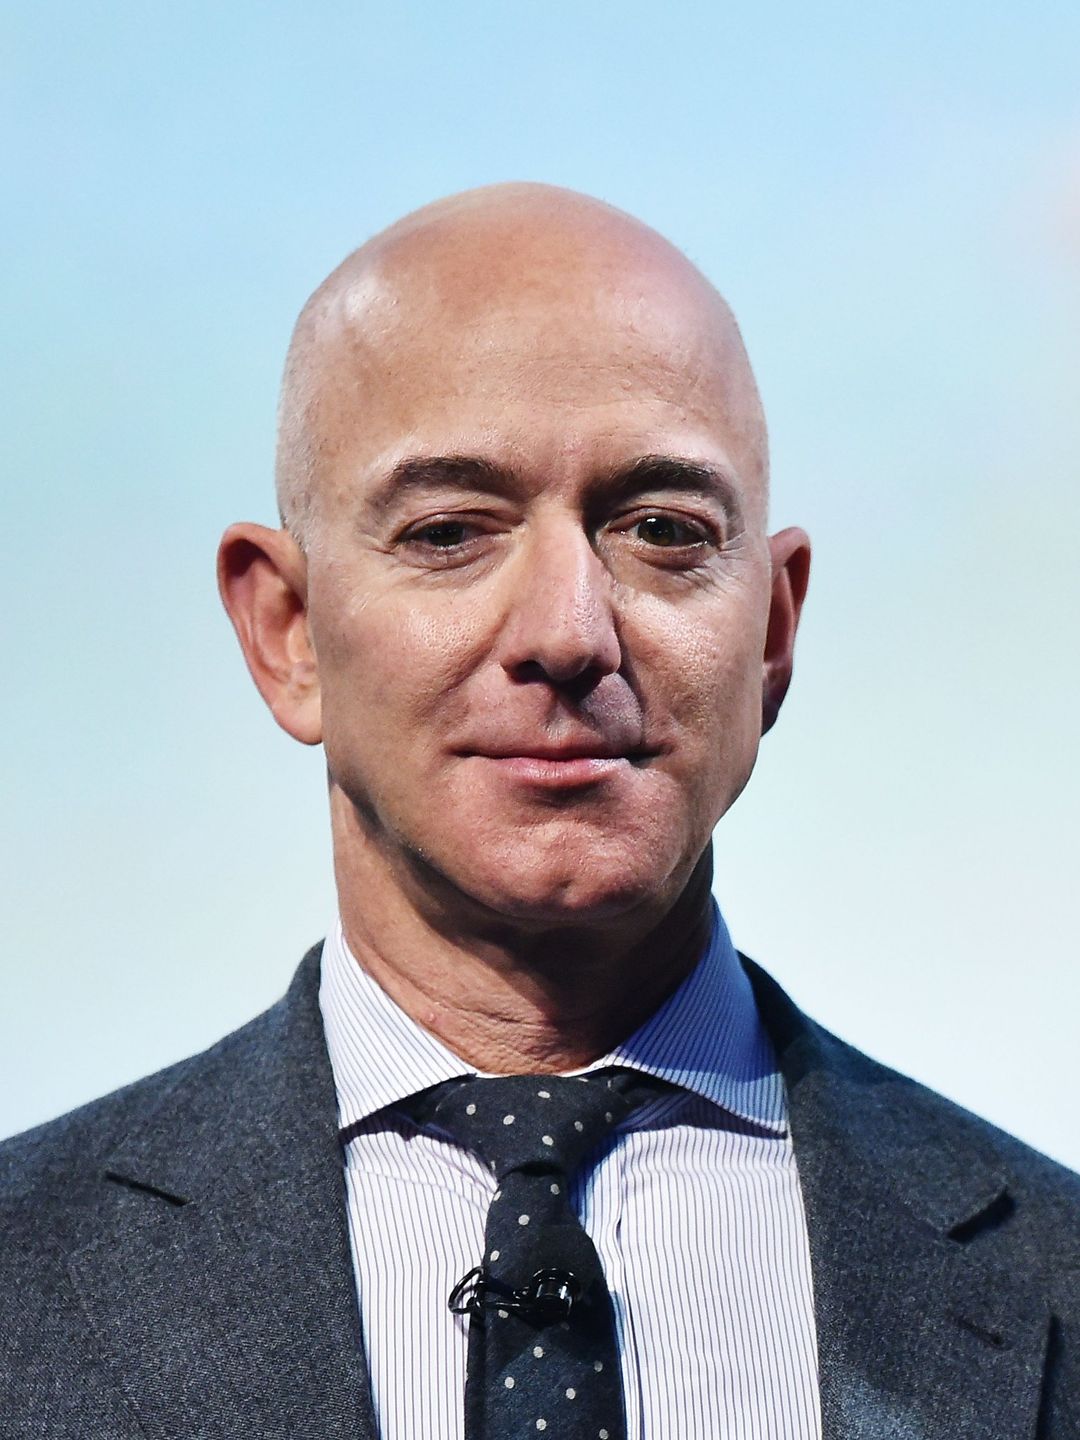 Jeff Bezos age